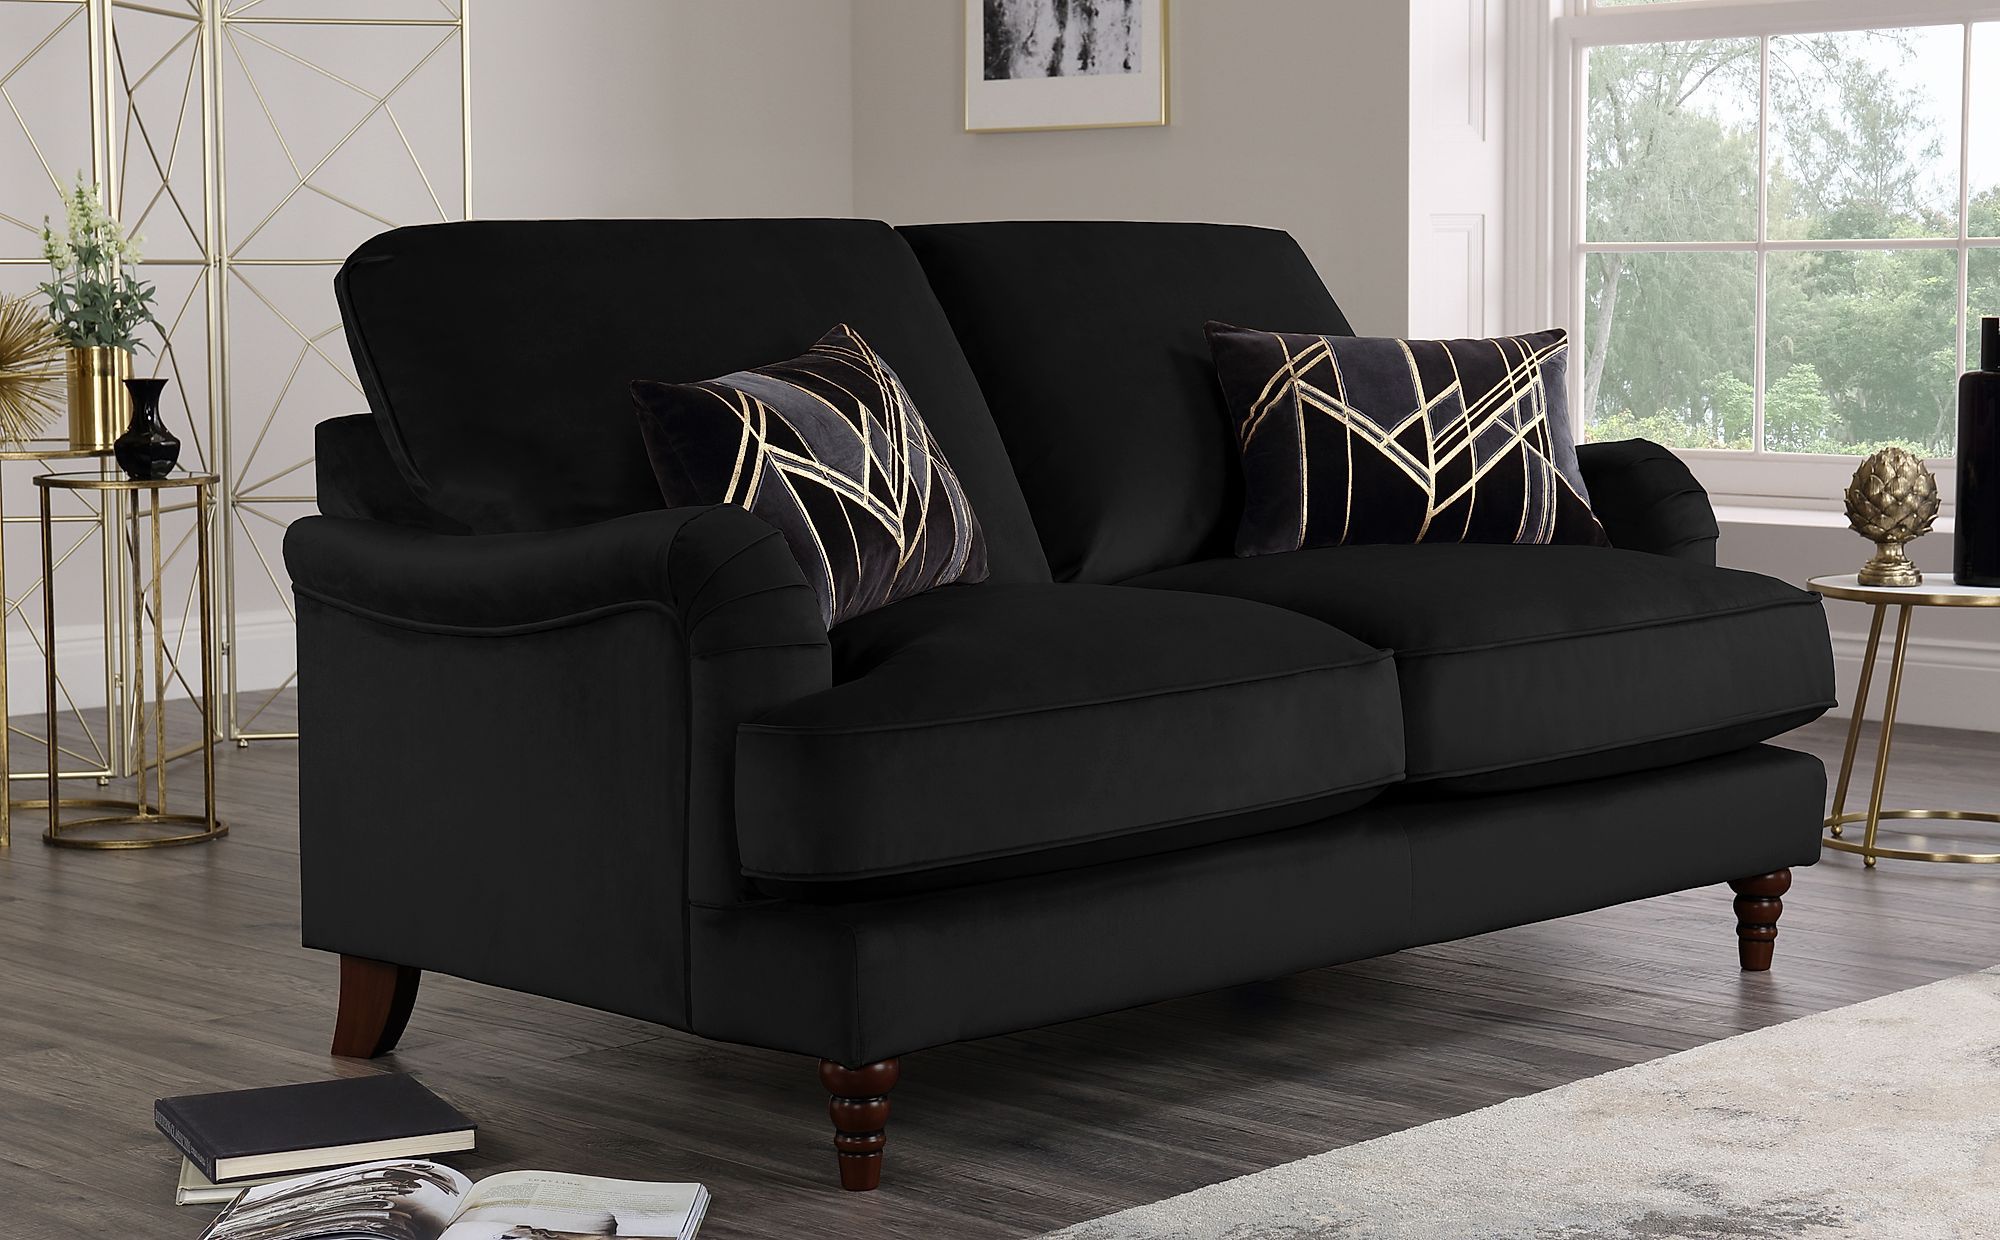 Charleston Black Velvet 2 Seater Sofa | Furniture Choice Pertaining To Right Facing Black Sofas (Gallery 15 of 20)